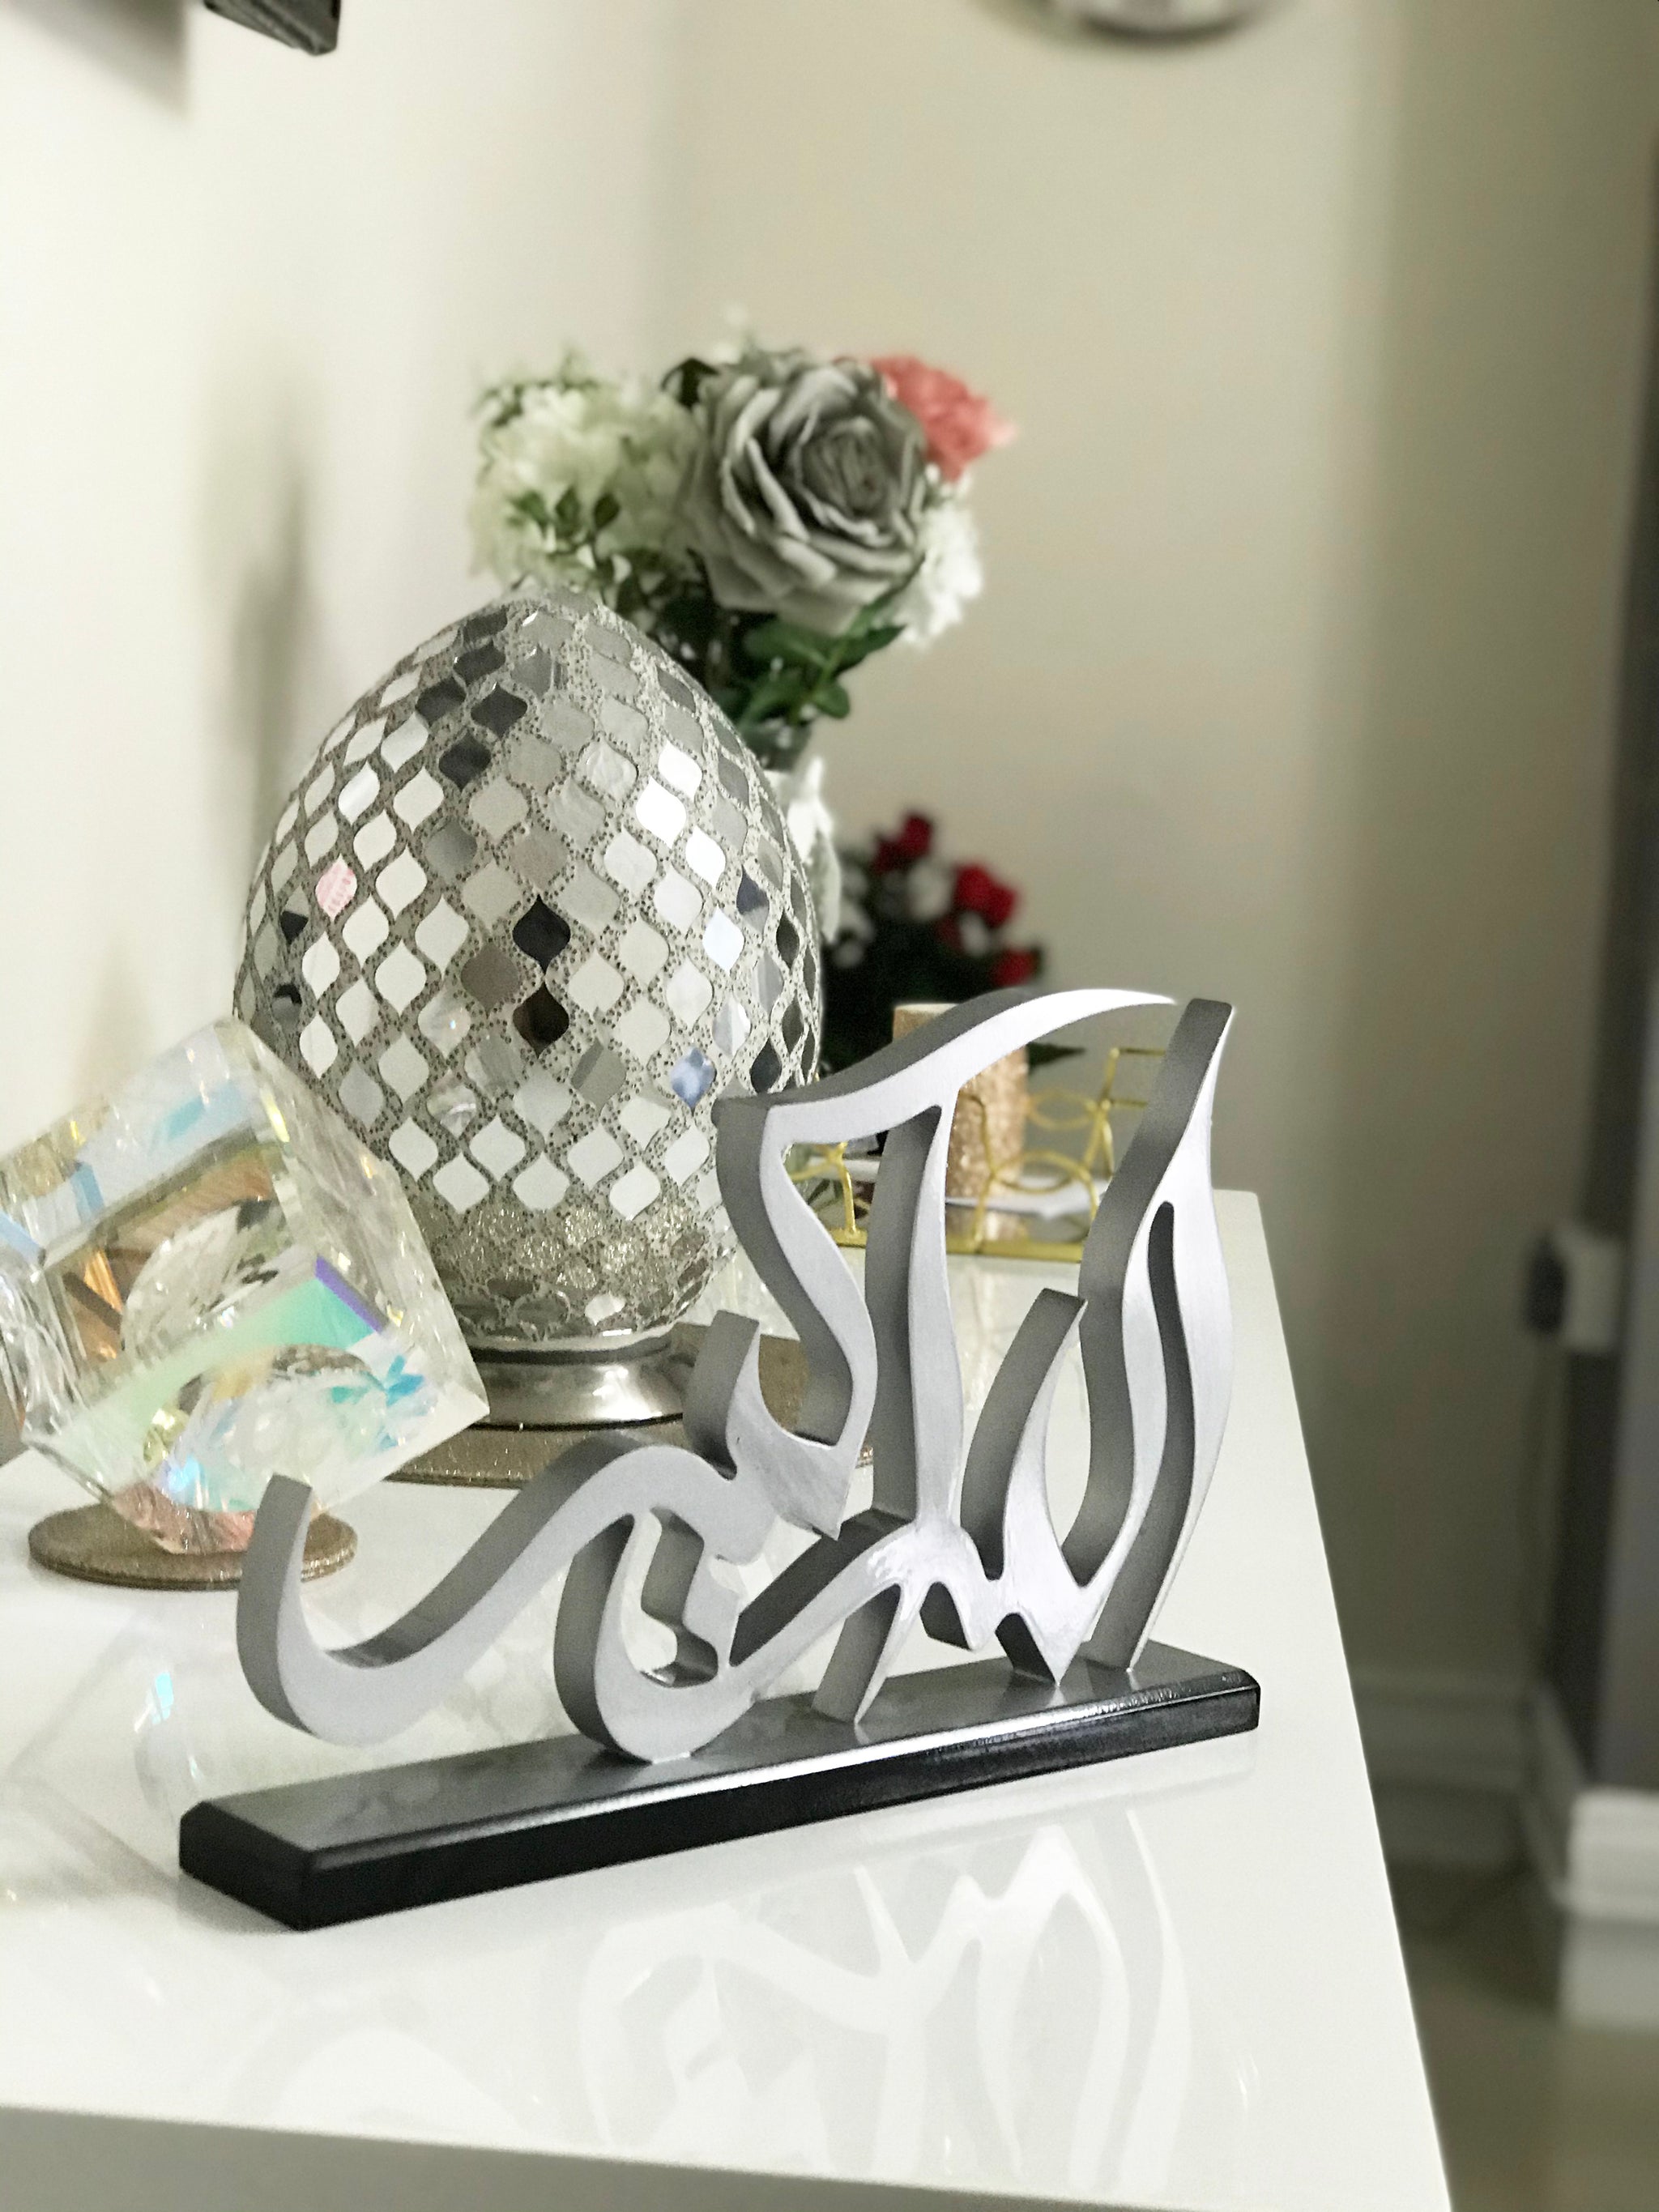 Allah ho Akbar Table Decor 3D Wood Islamic Calligraphy